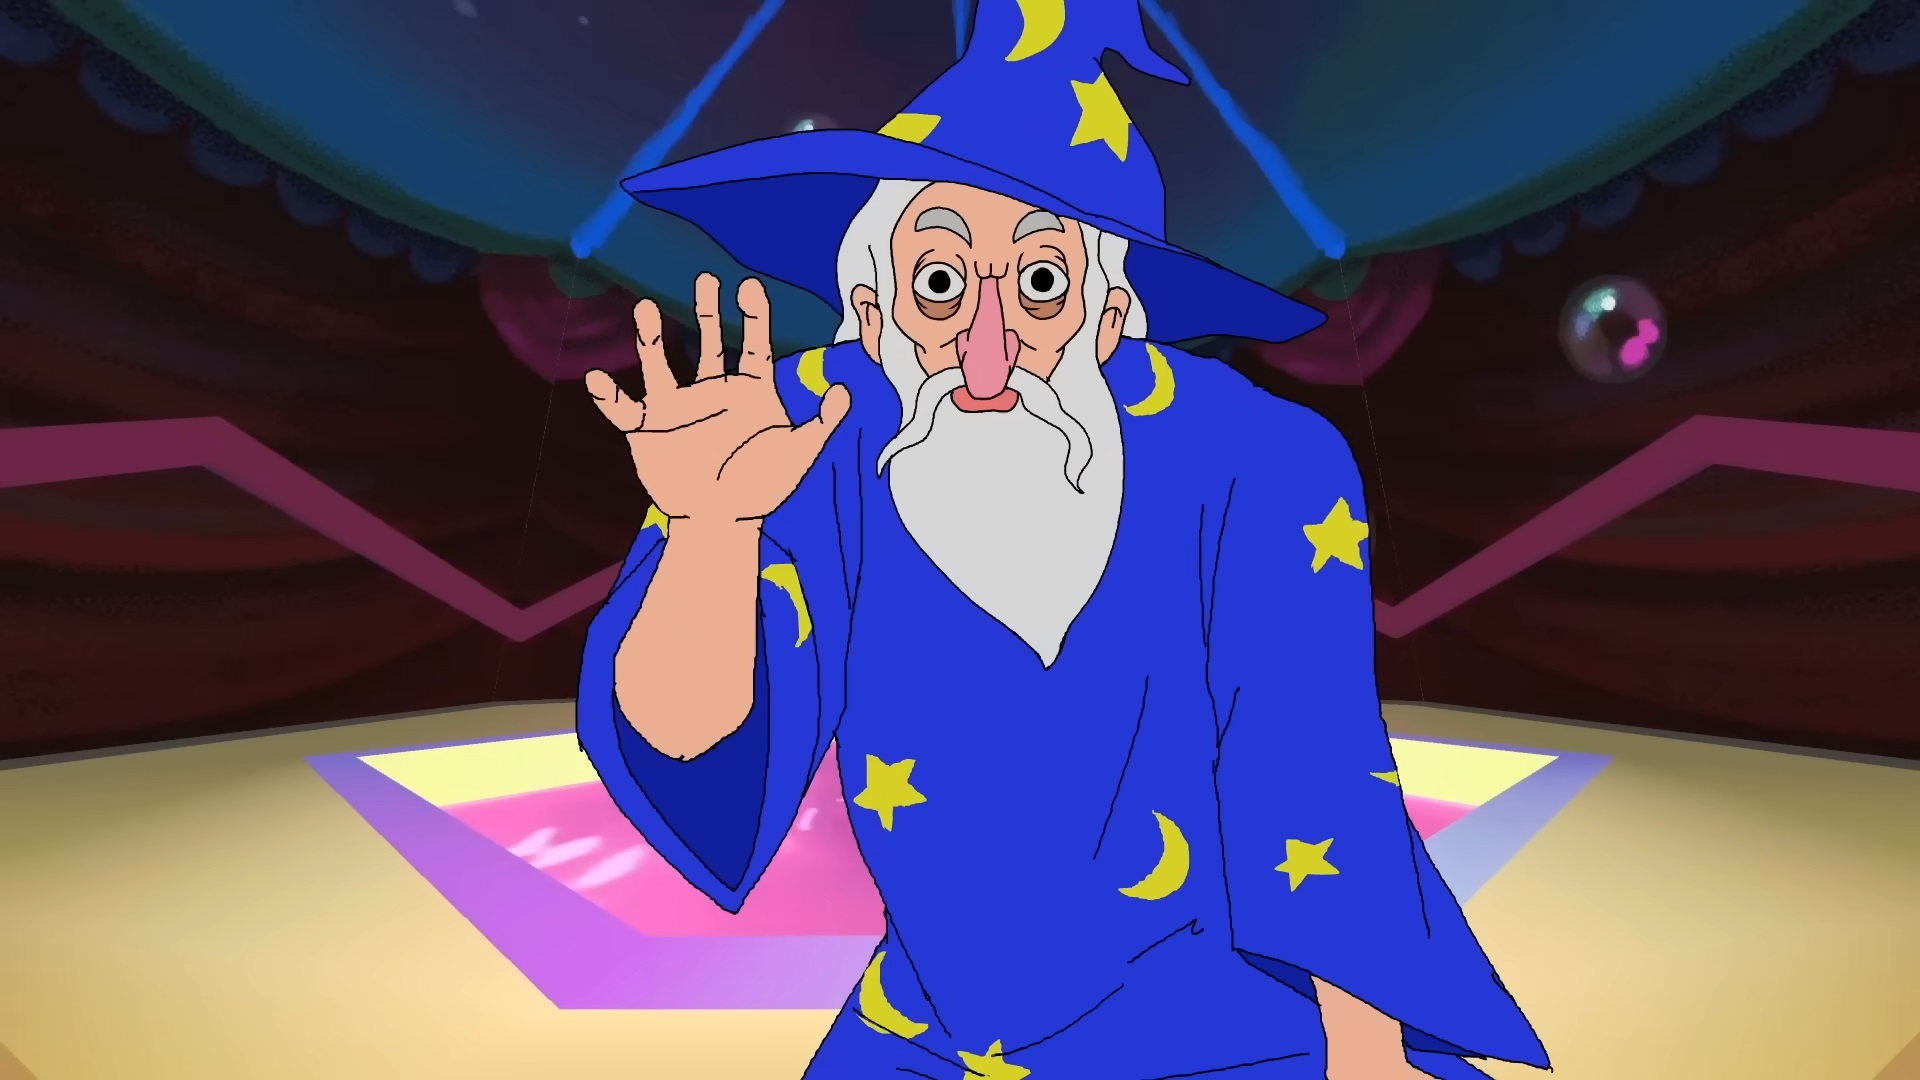 low-fi wizard dancing on screen